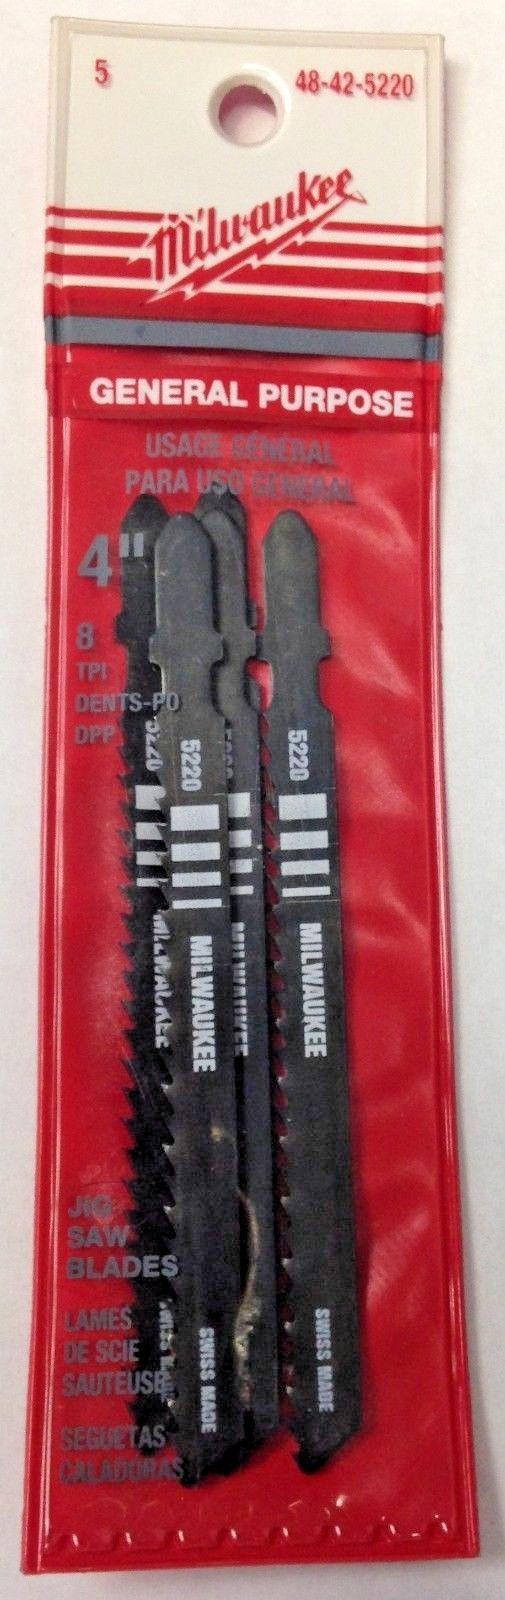 Milwaukee 48-42-5220 4" x 8 TPI General Purpose Jig Saw Blades 5 Pack Swiss Made